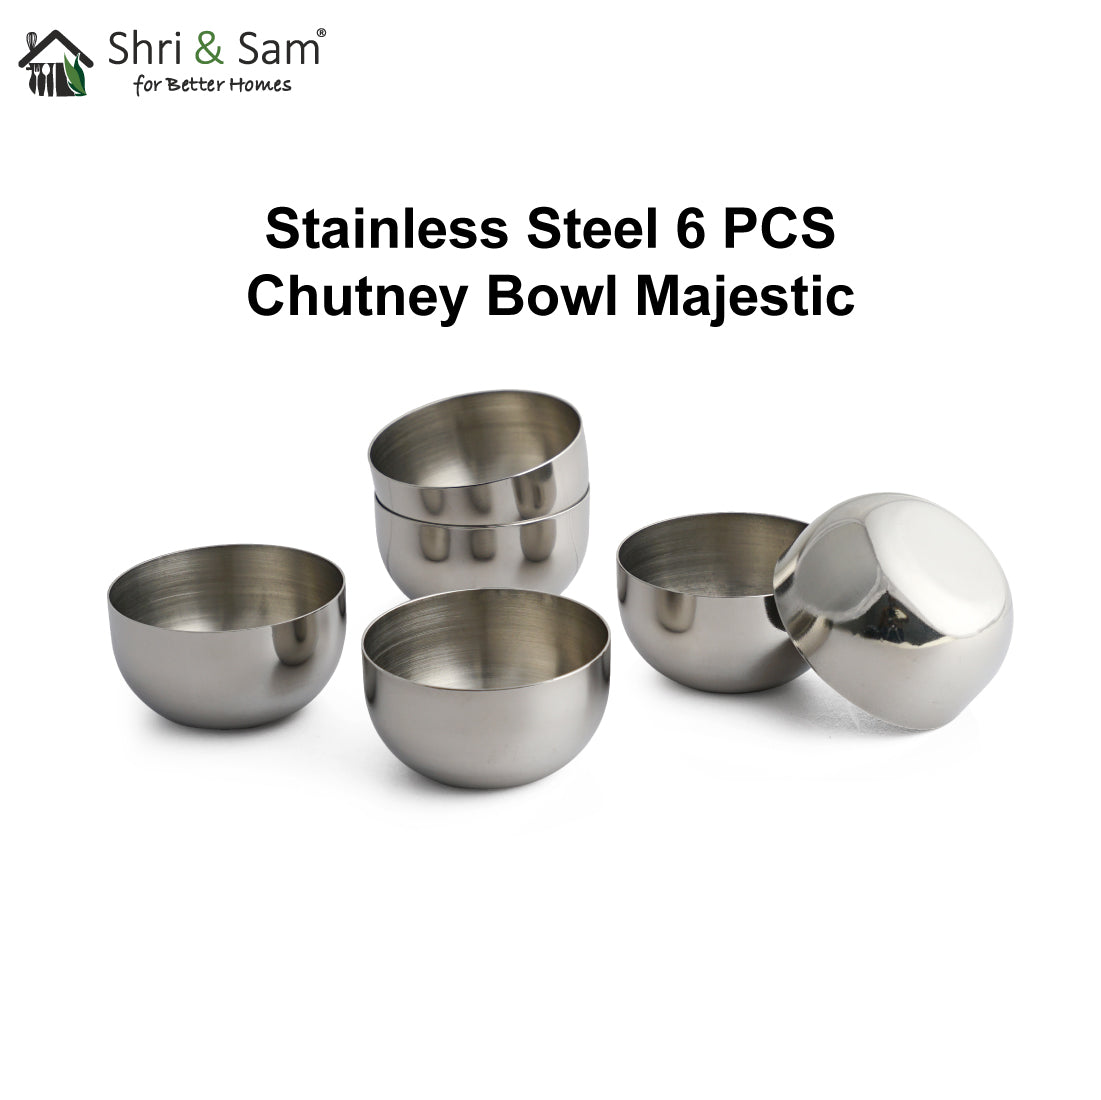 Stainless Steel 6 PCS Chutney Bowl Majestic